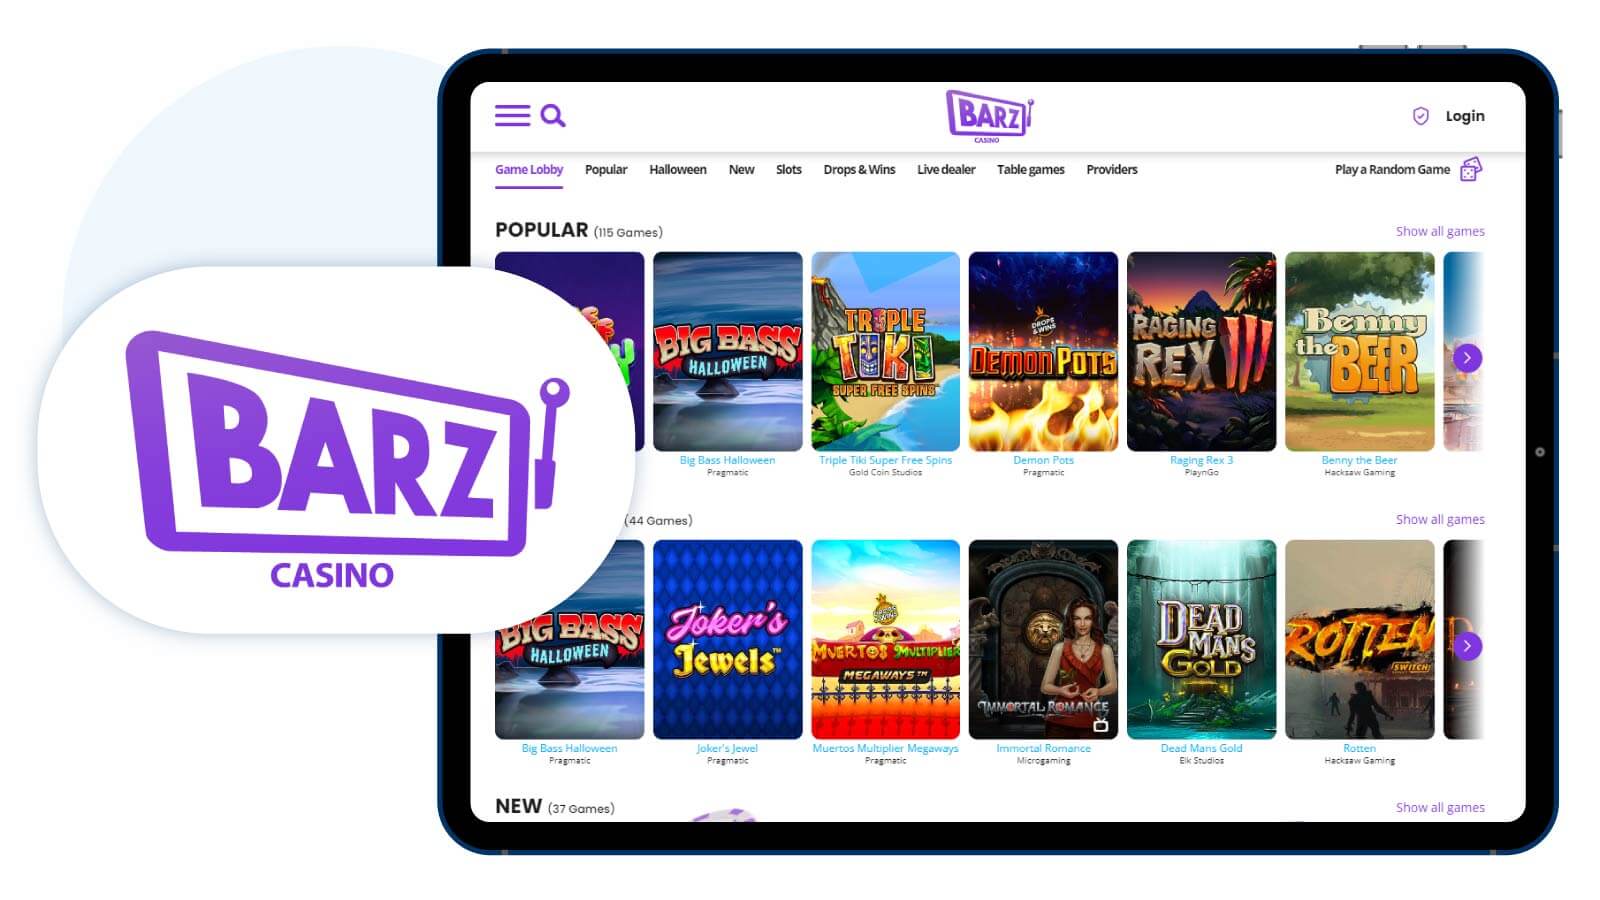 #2 Barz Casino – Best New Casino With a 100% Match Bonus